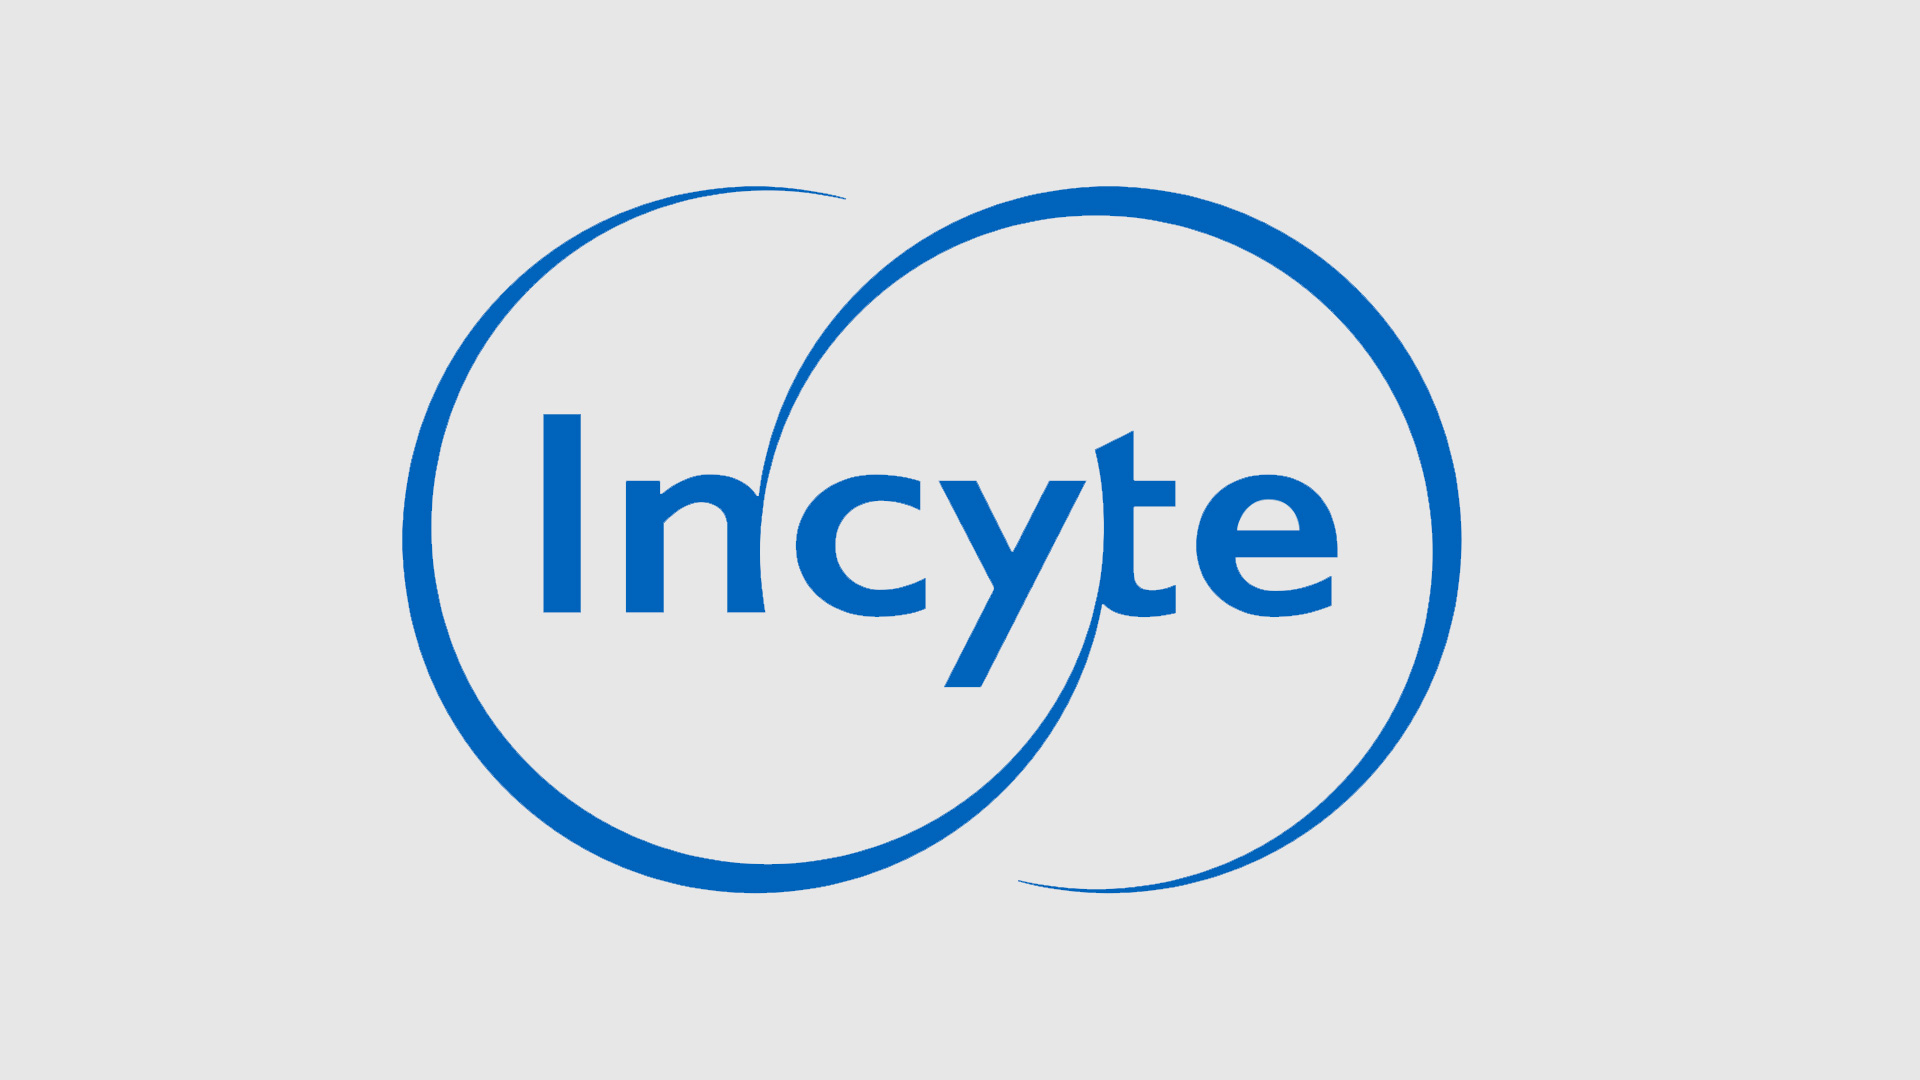 mejores-logos-farmaceutico-incyte-19